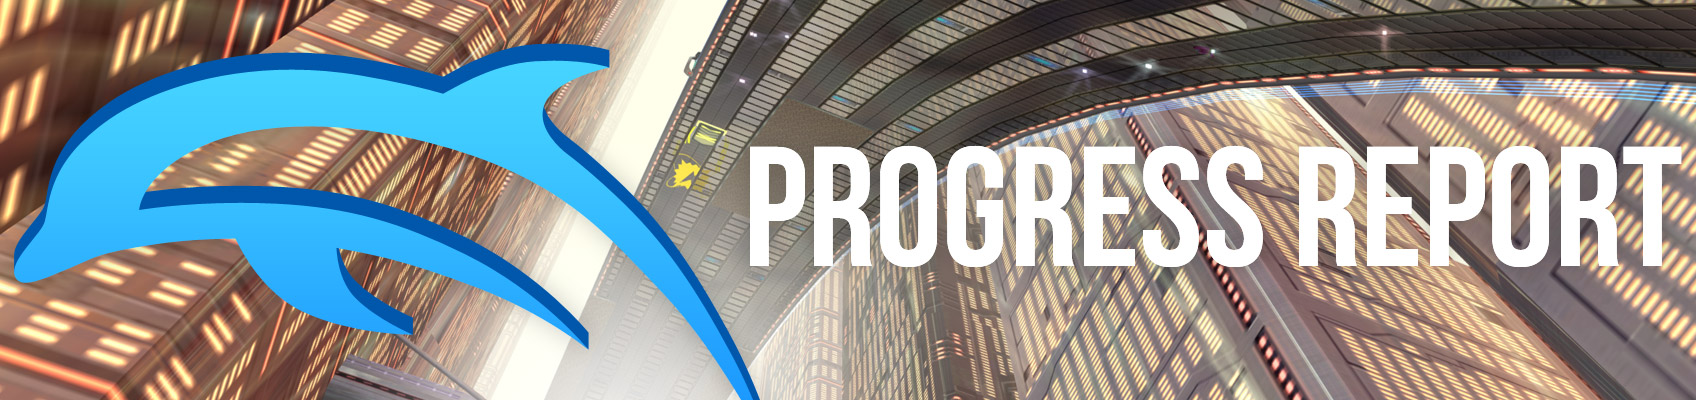 Progressreportheader-December2014.jpg